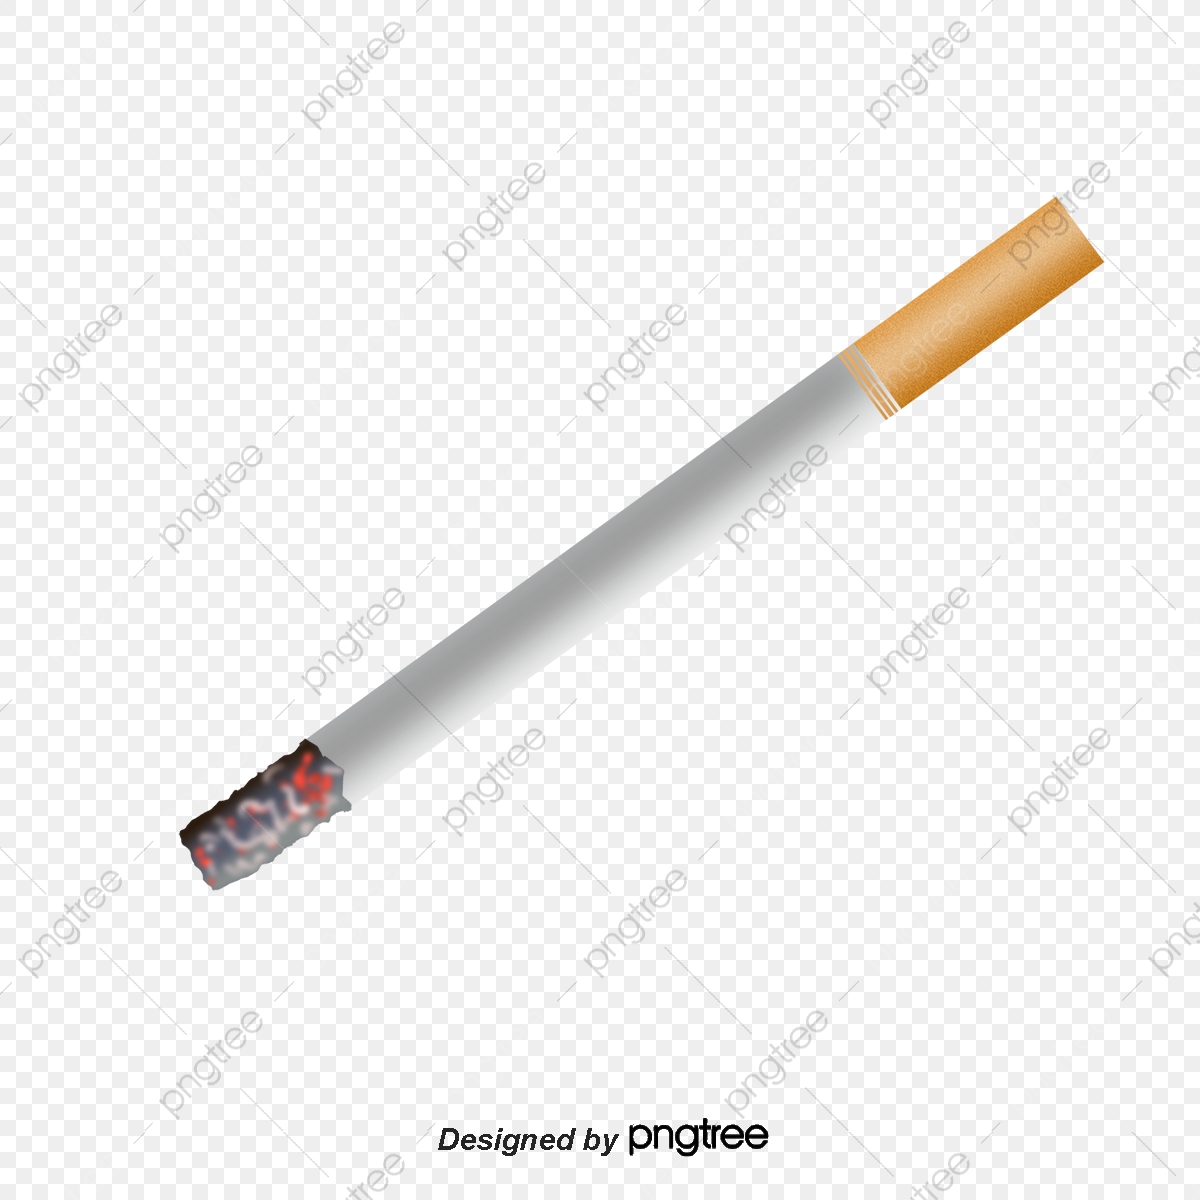 Smoke smokes png transparent. Cigarette clipart file